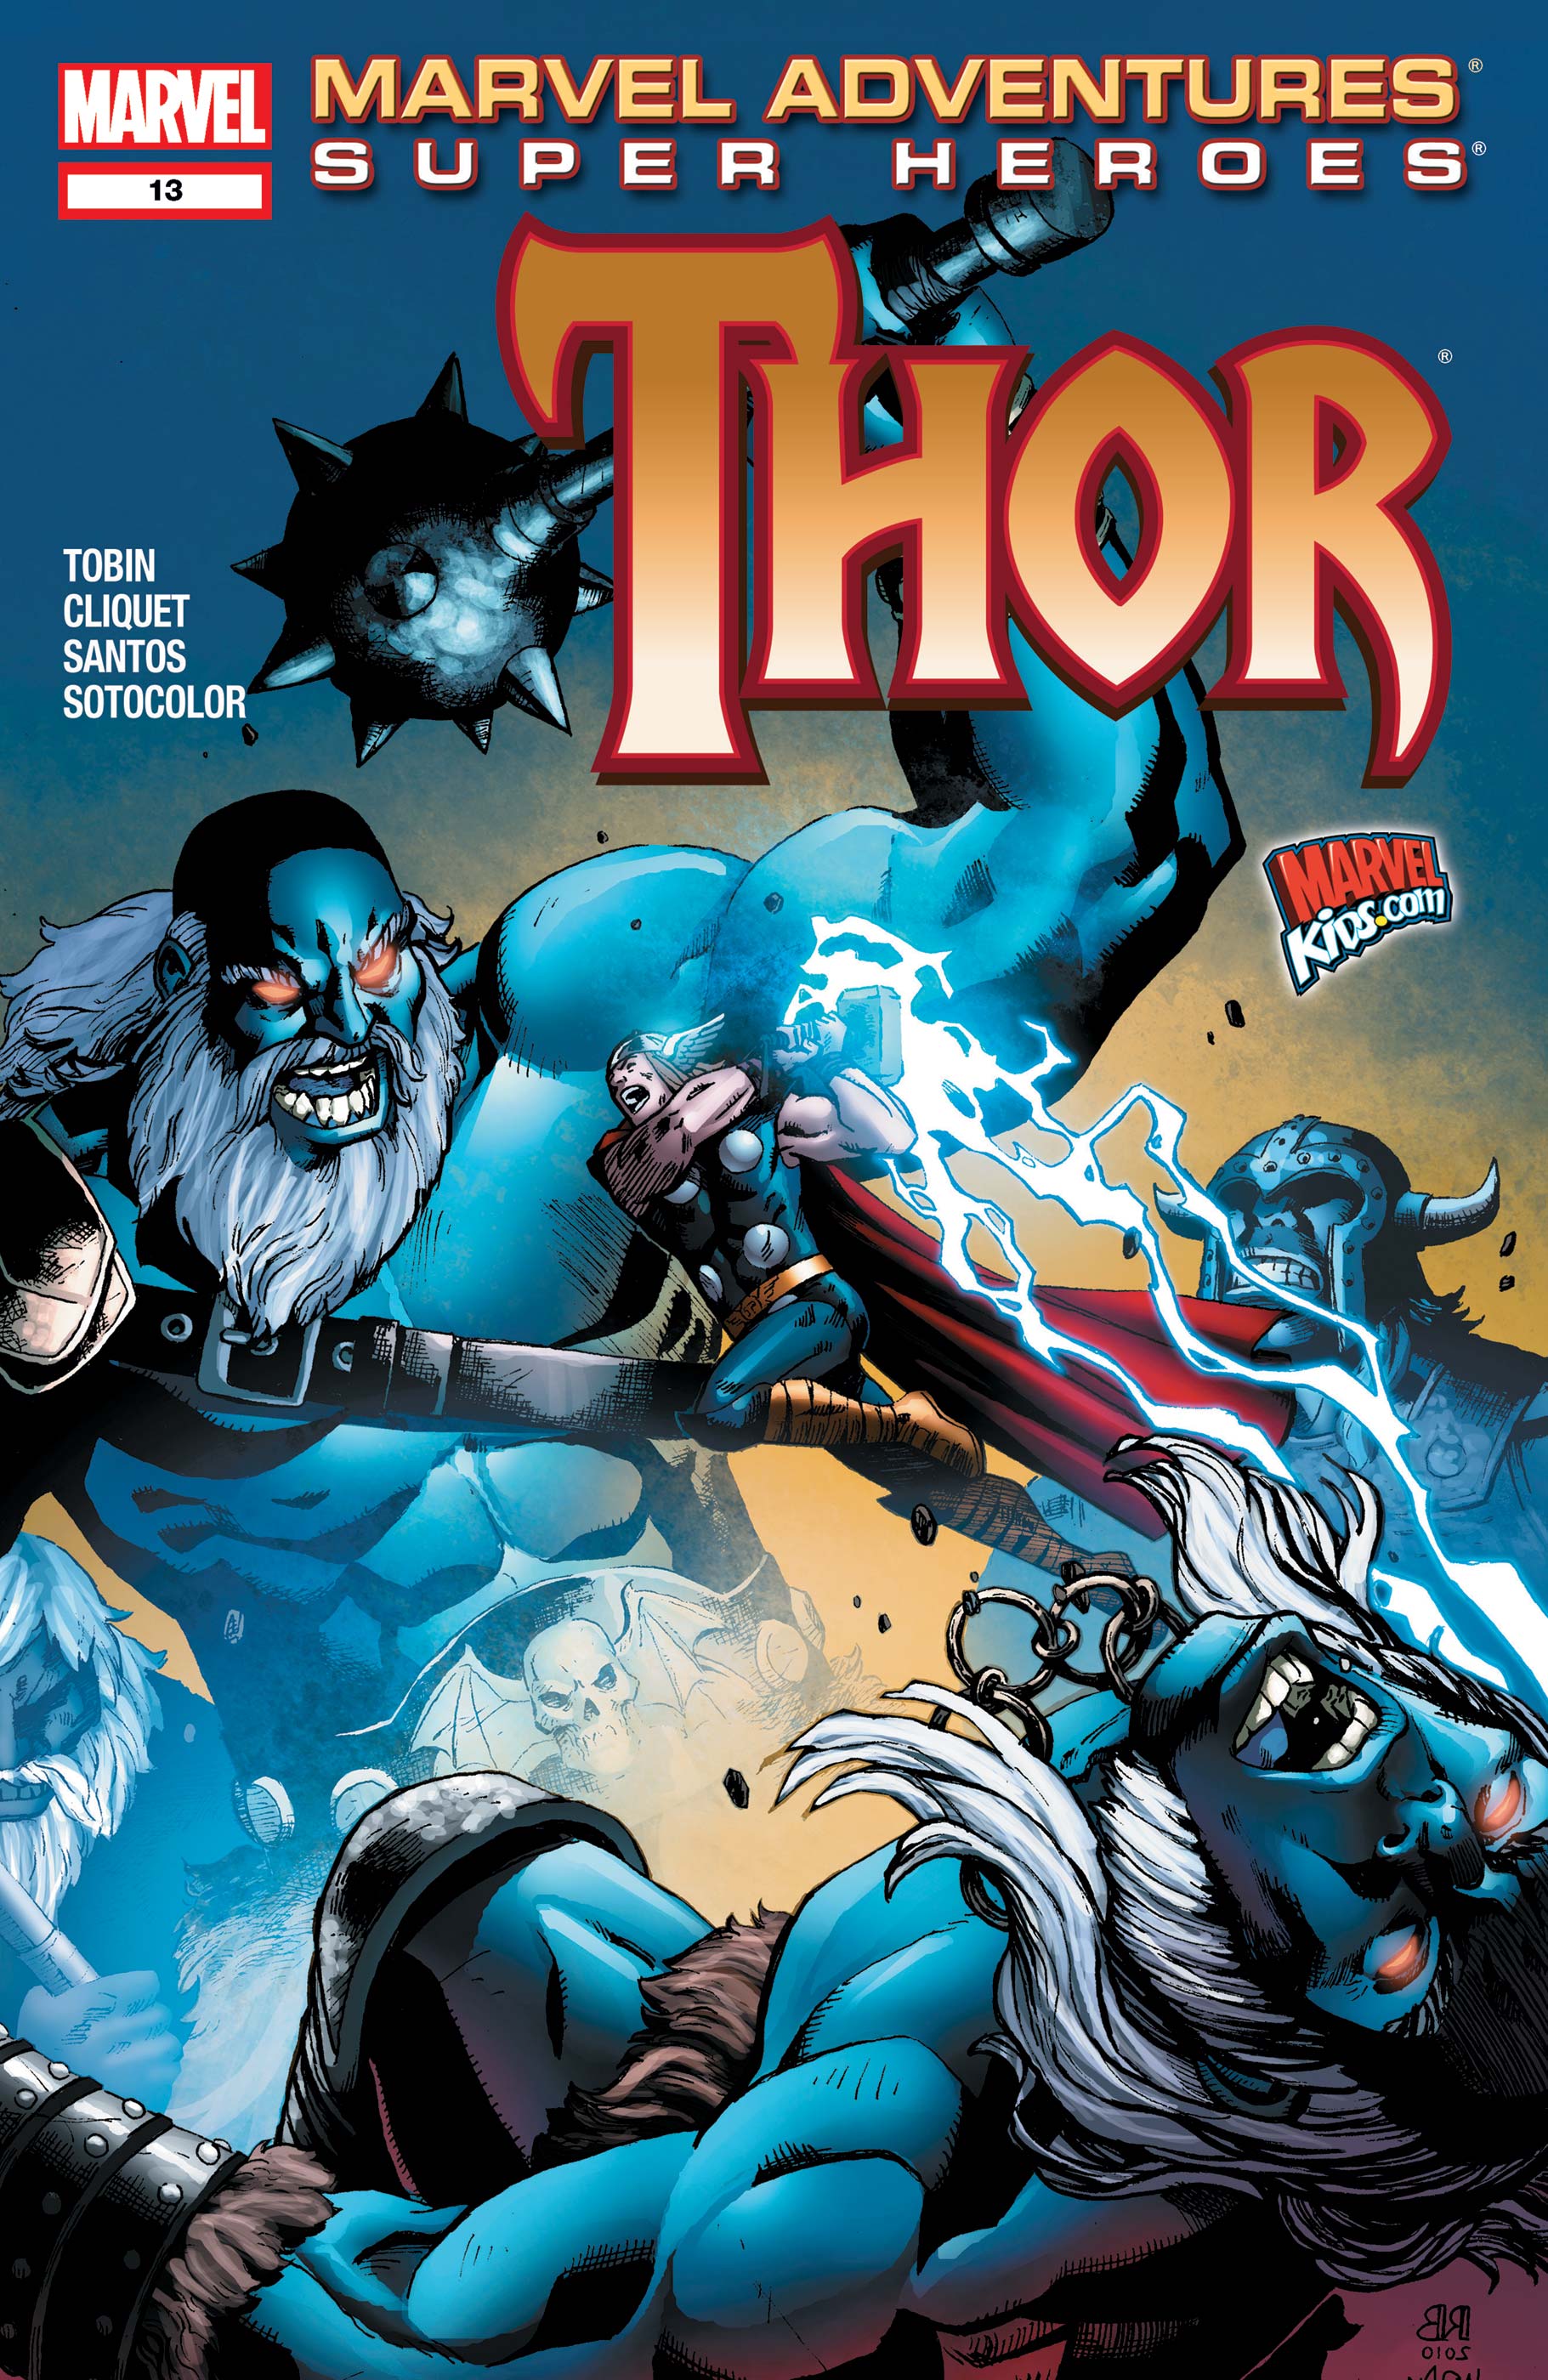 Marvel Adventures Super Heroes (2010) #13